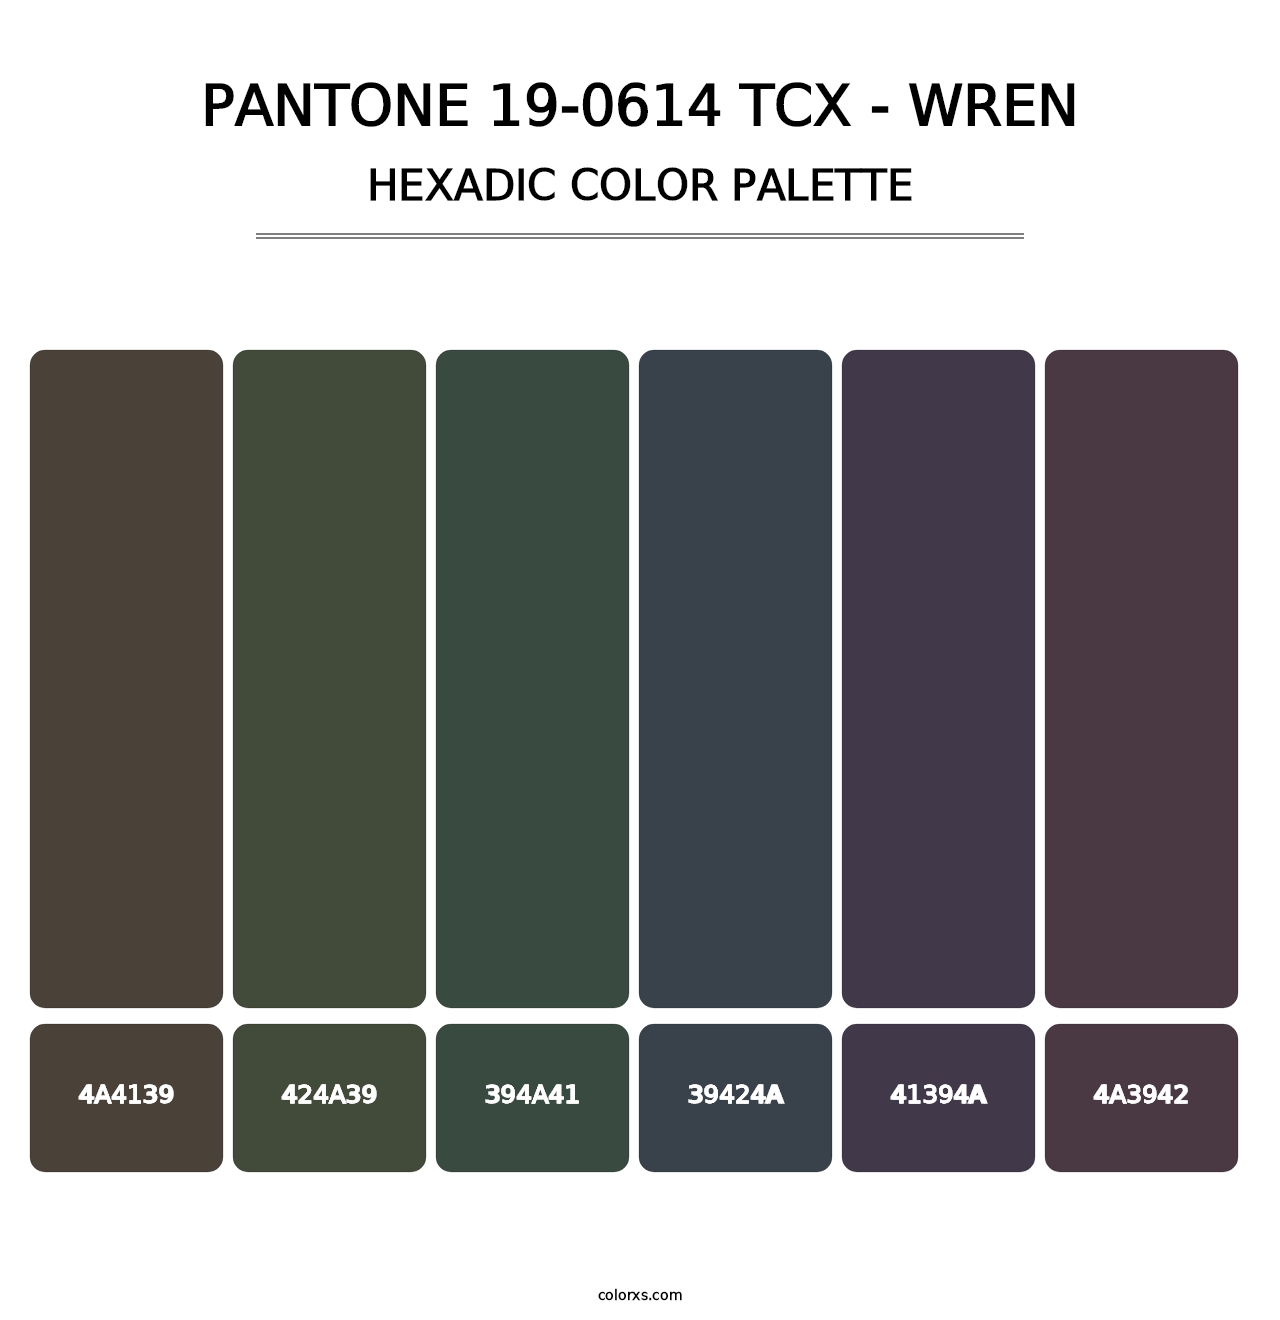 PANTONE 19-0614 TCX - Wren - Hexadic Color Palette